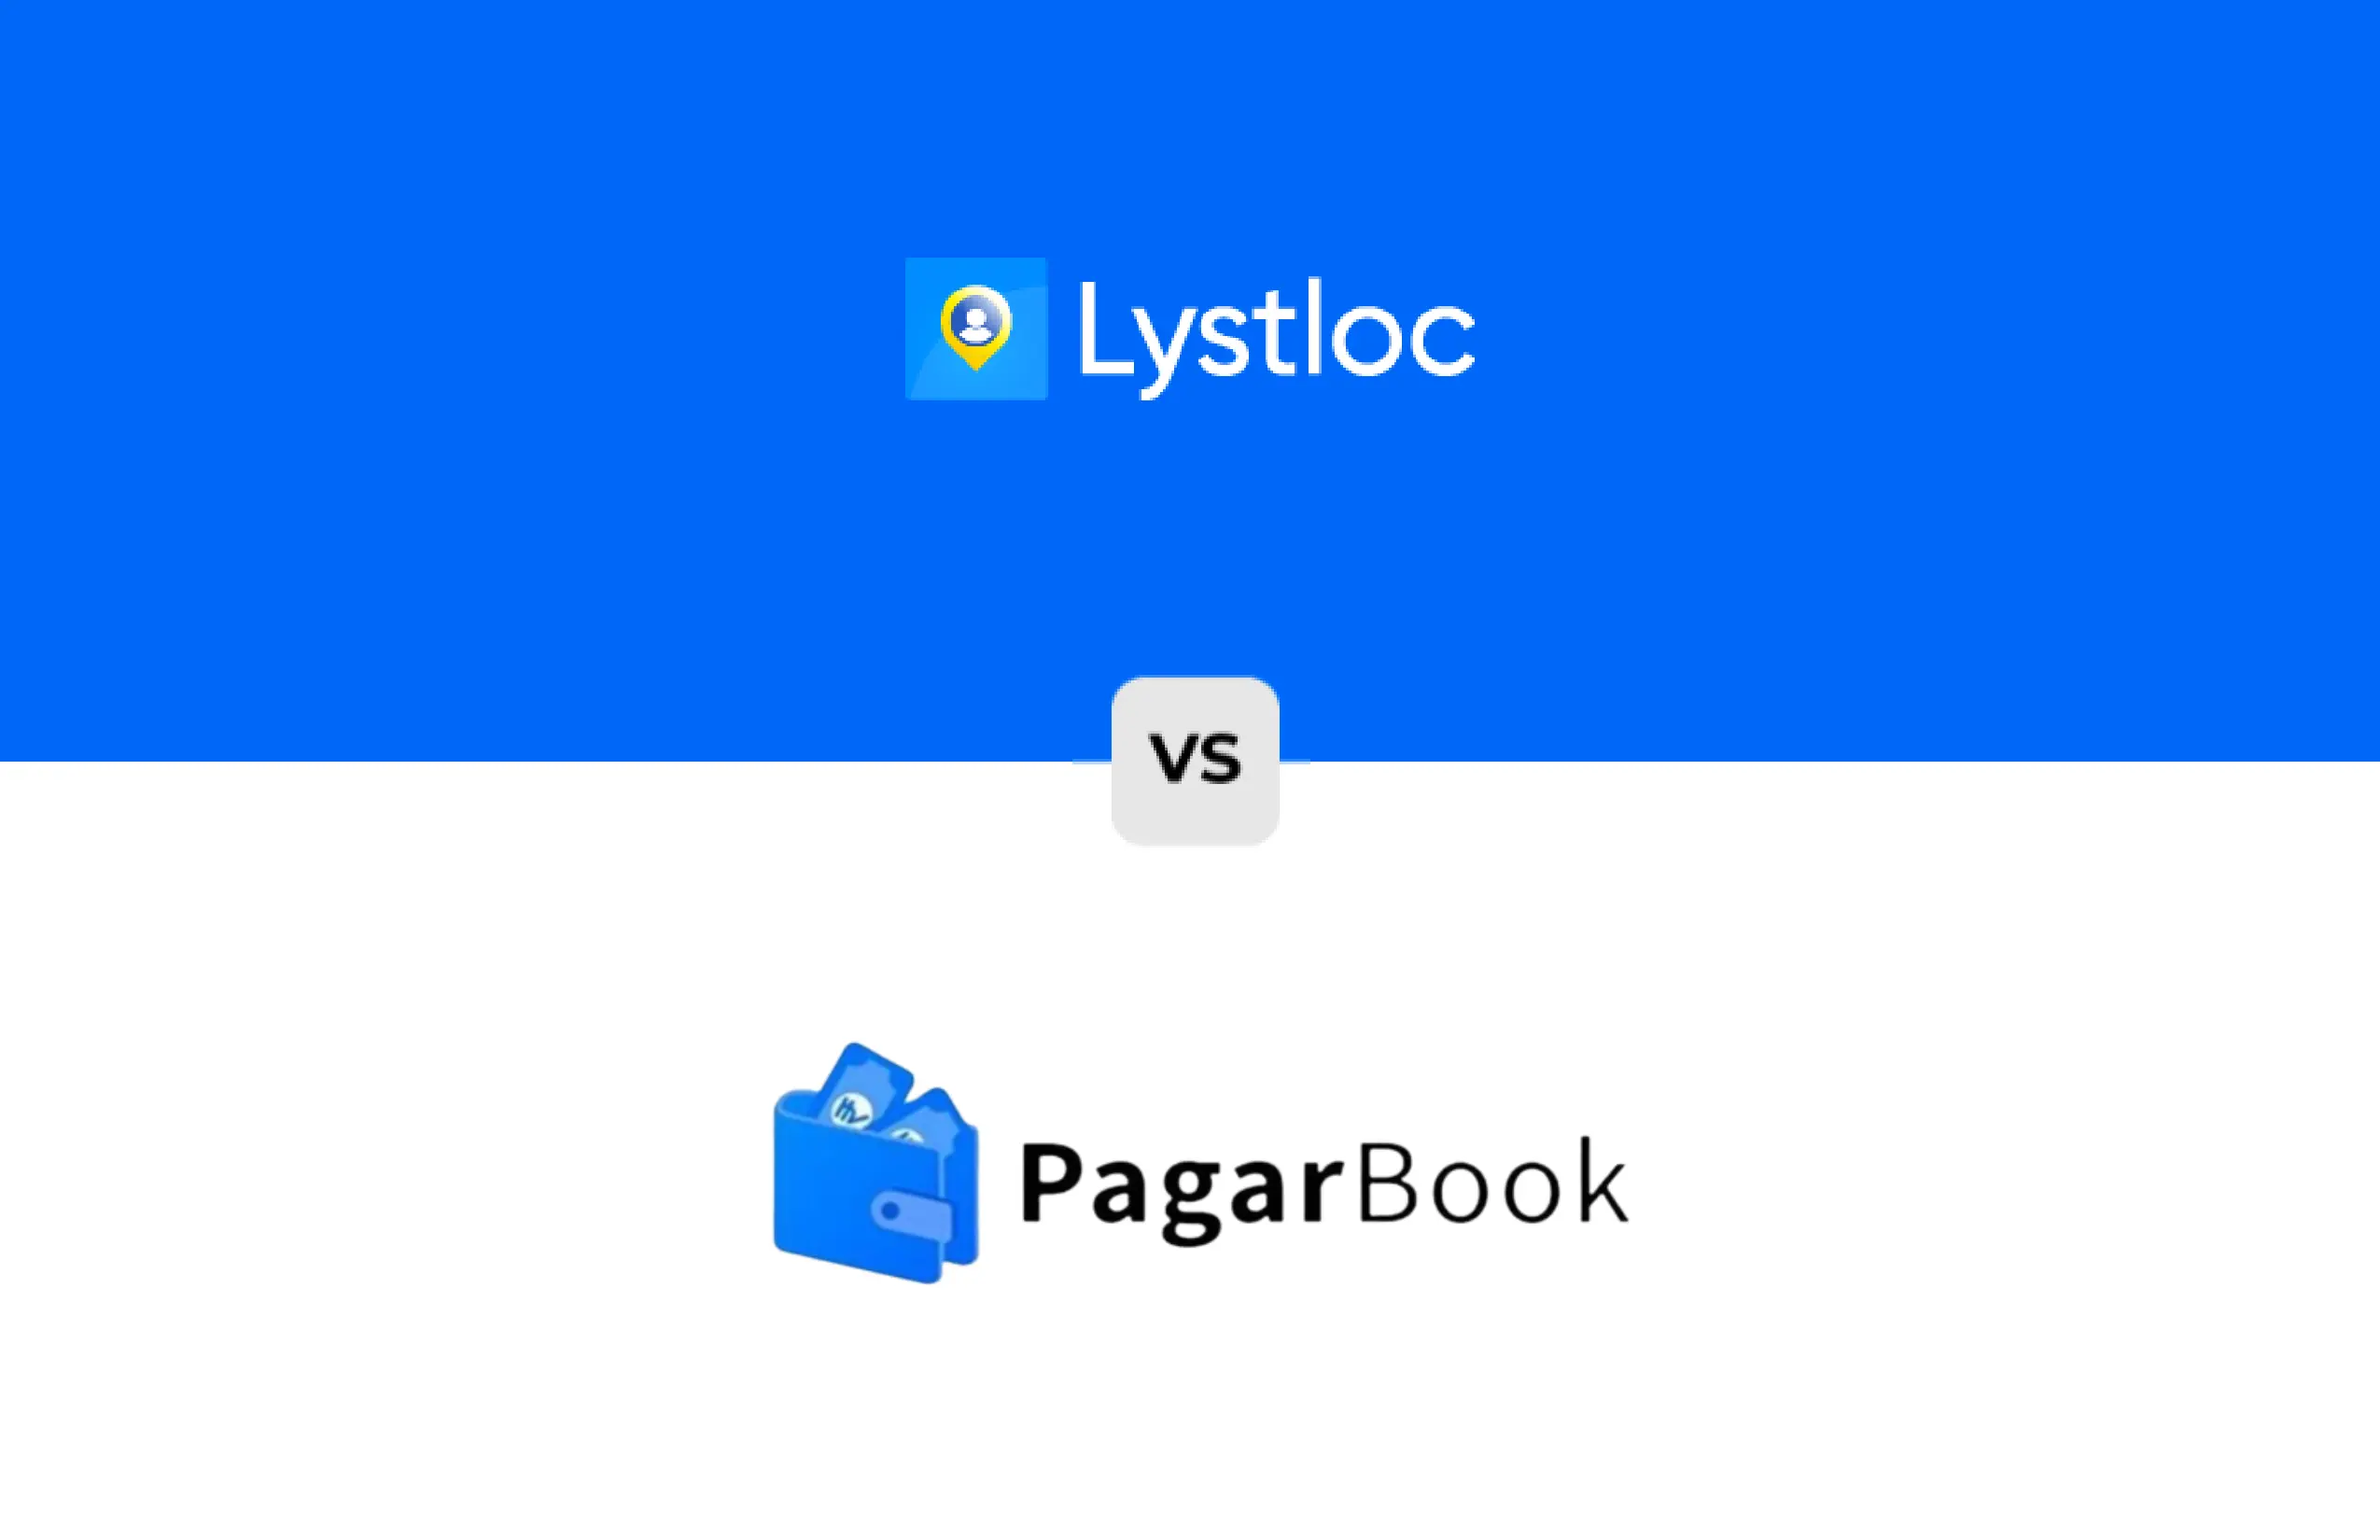 Lystloc vs PagarBook